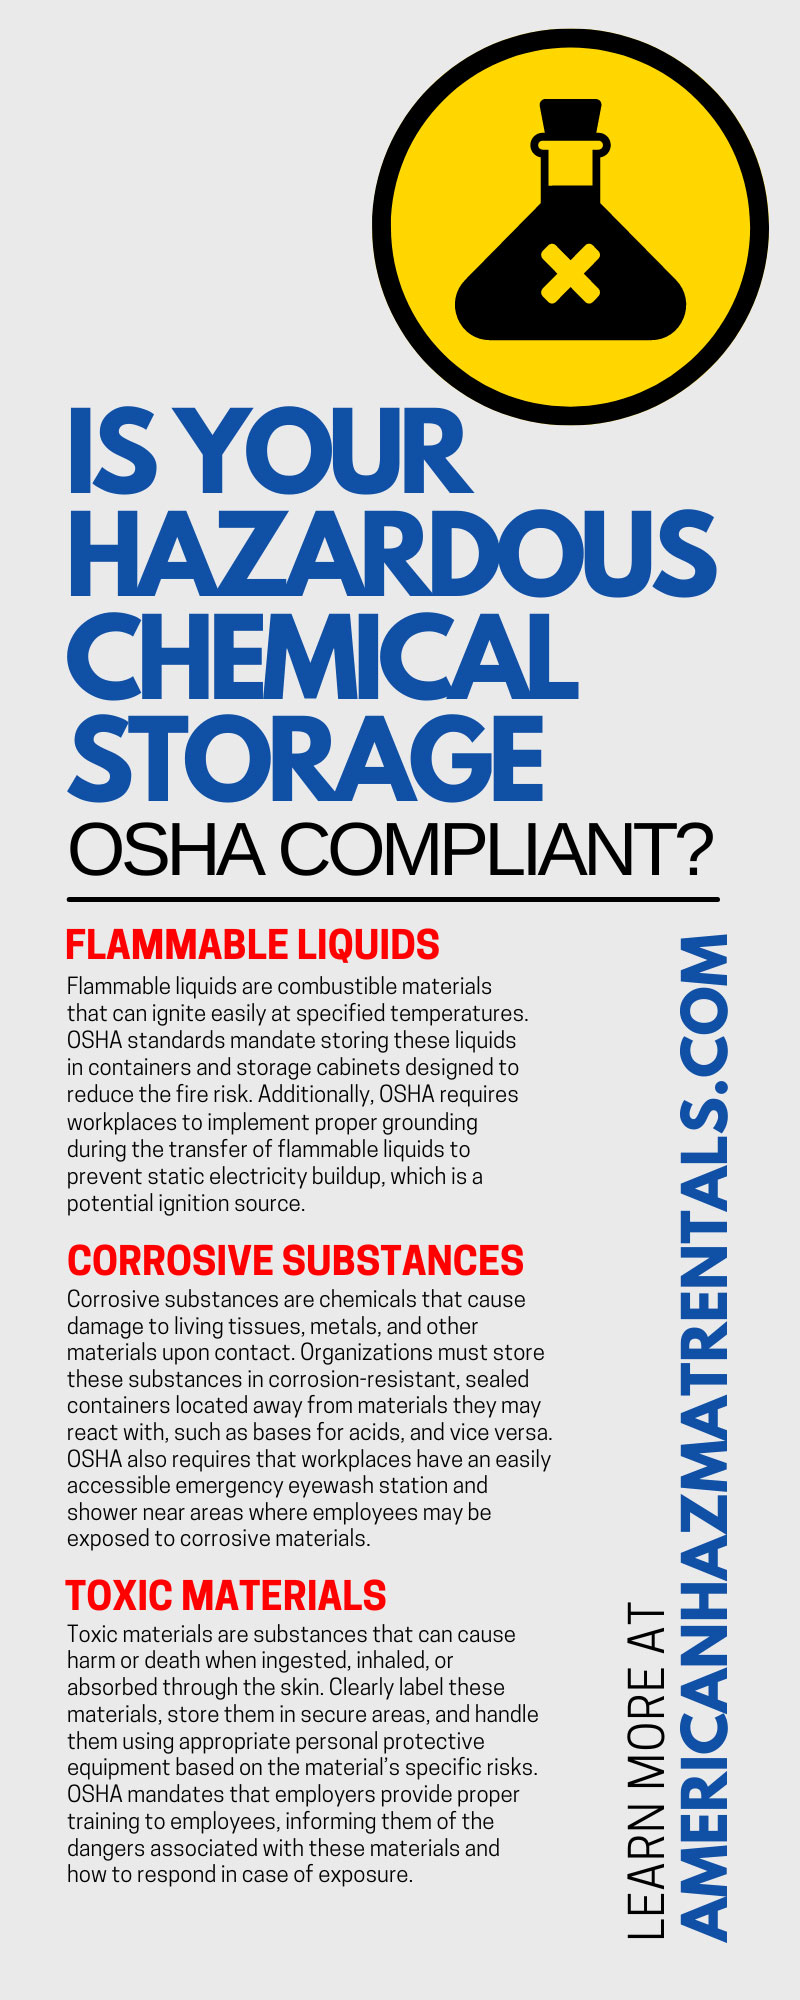 Is Your Hazardous Chemical Storage OSHA Compliant?